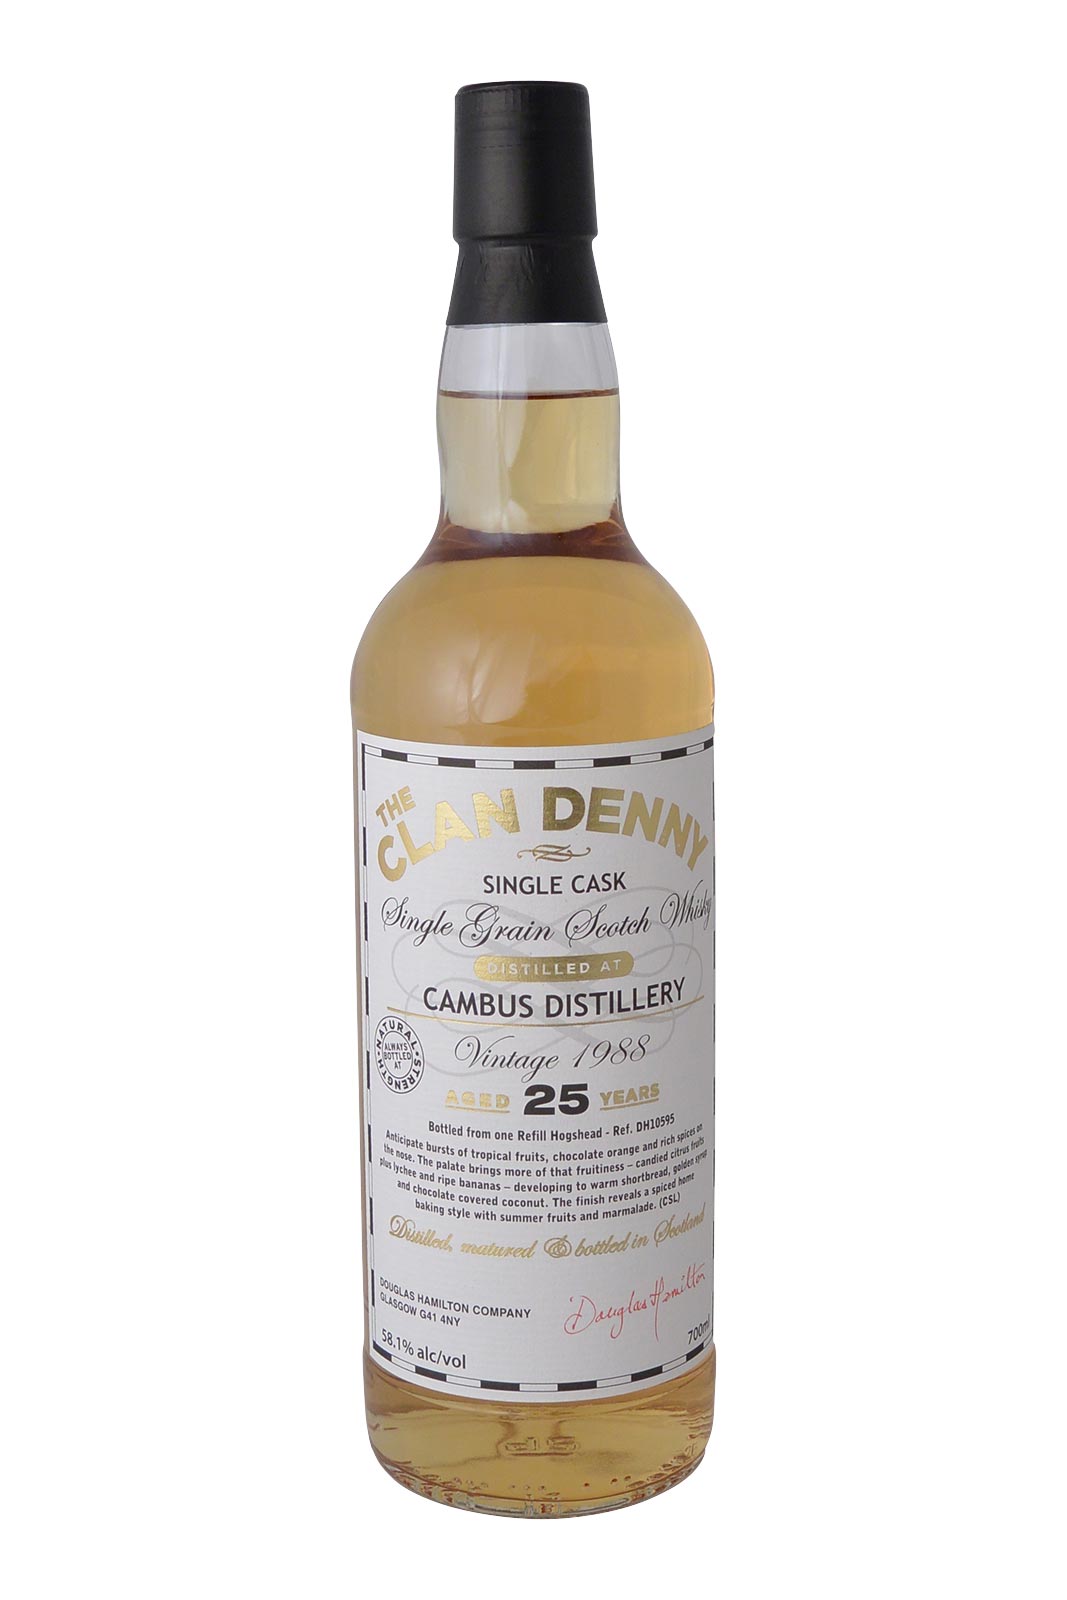 Clan Denny Cambus Distillery 25 Year Old